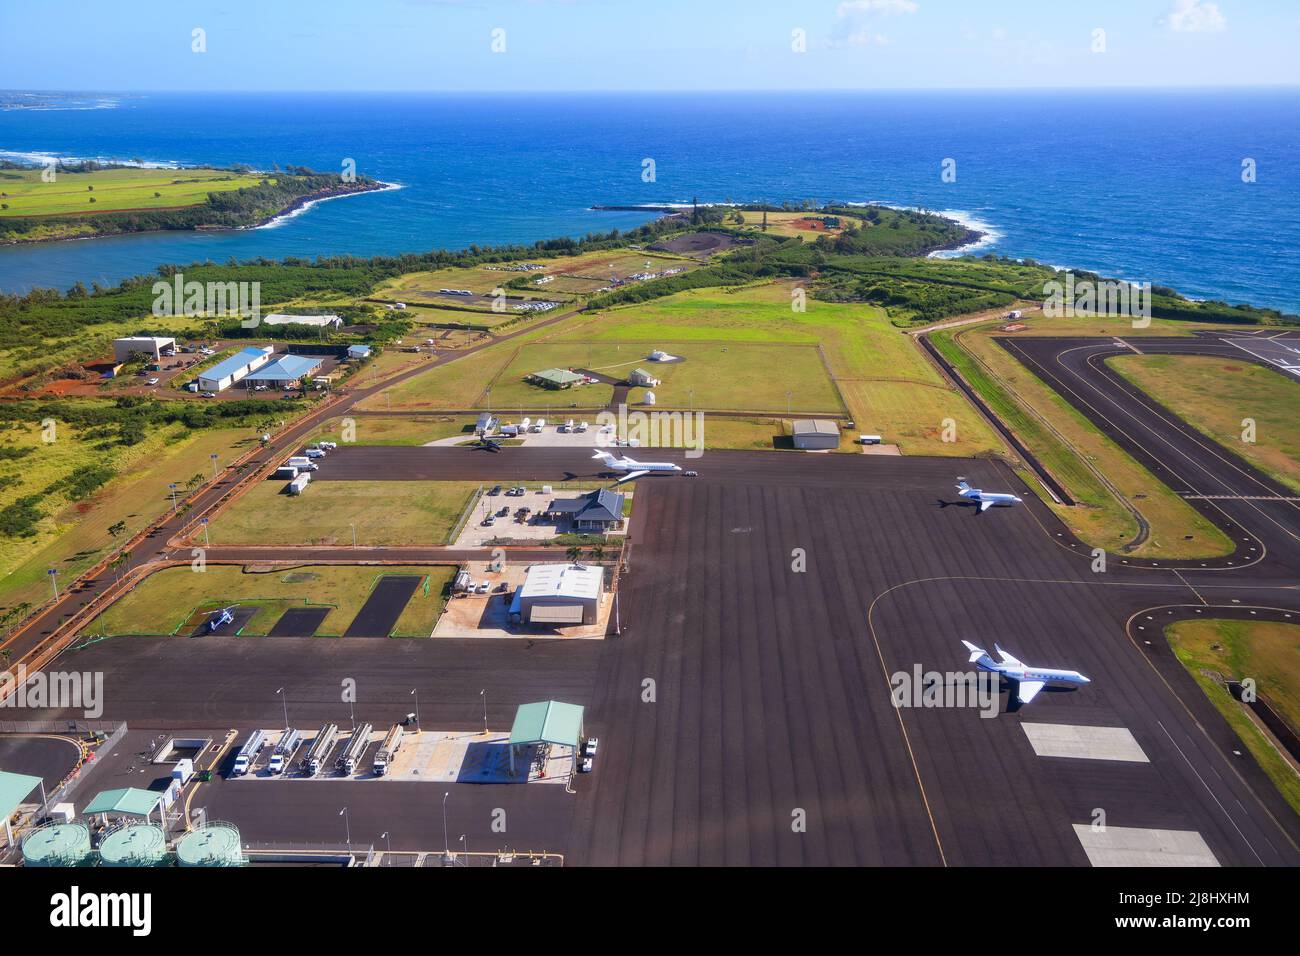 Aerial view of the runway and plane hangars of Lihue airport on Kauai ...